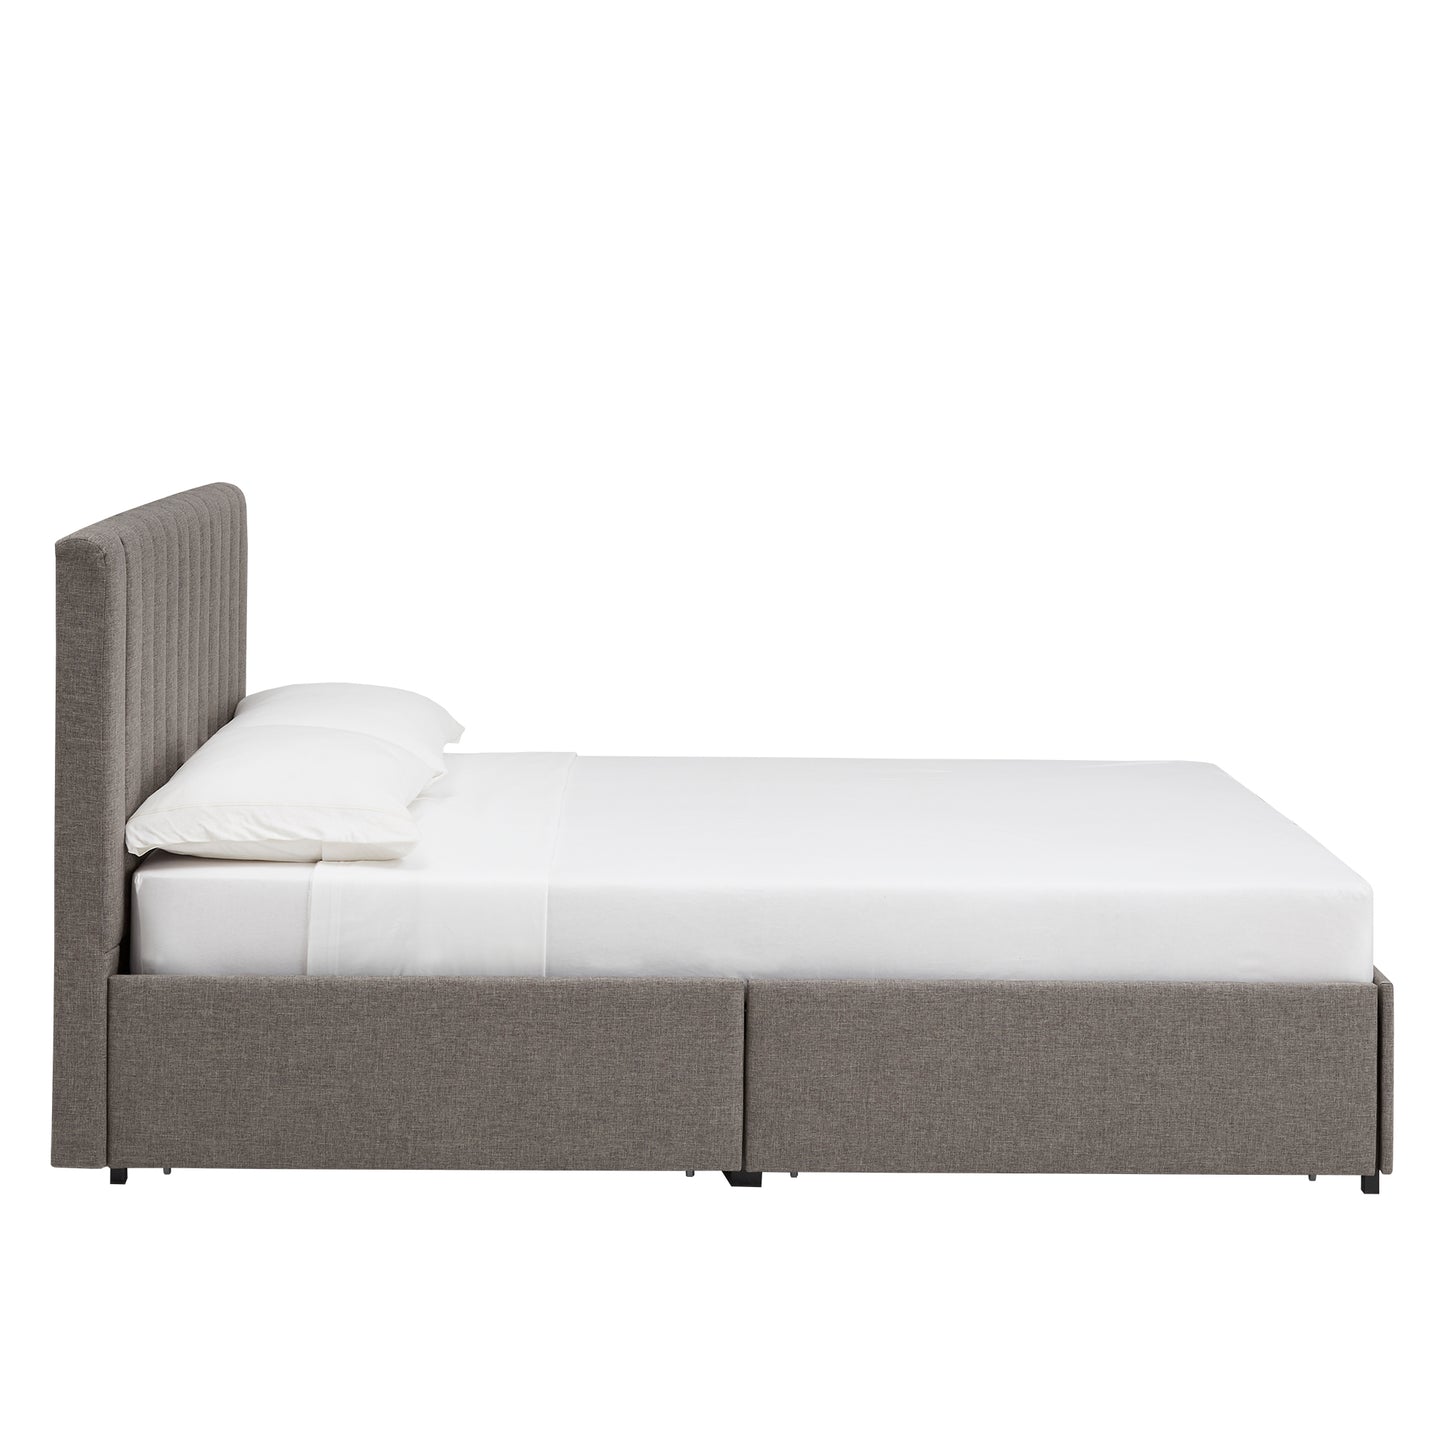 Grey Linen Upholstered Storage Platform Bed with Channel Headboard - Queen (Queen Size)